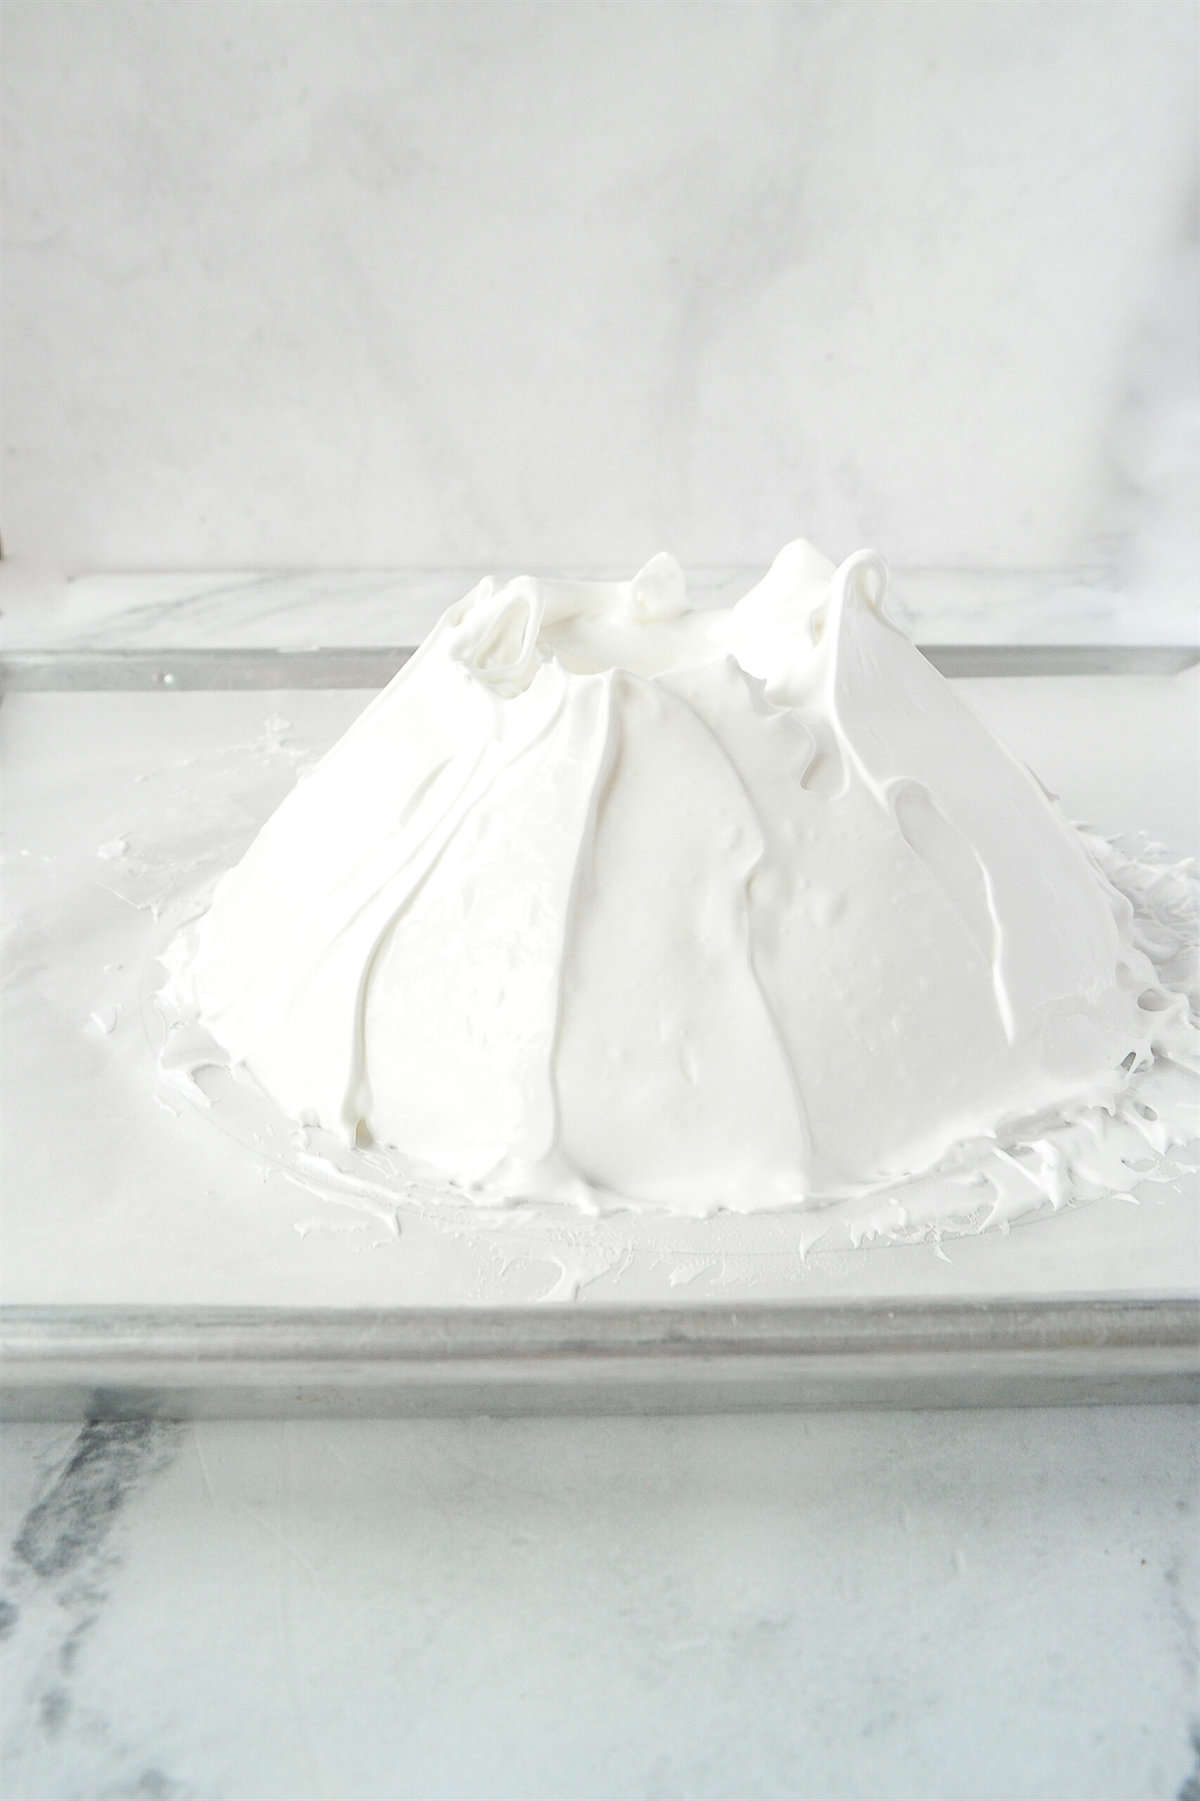 pavlova formed on a baking sheet